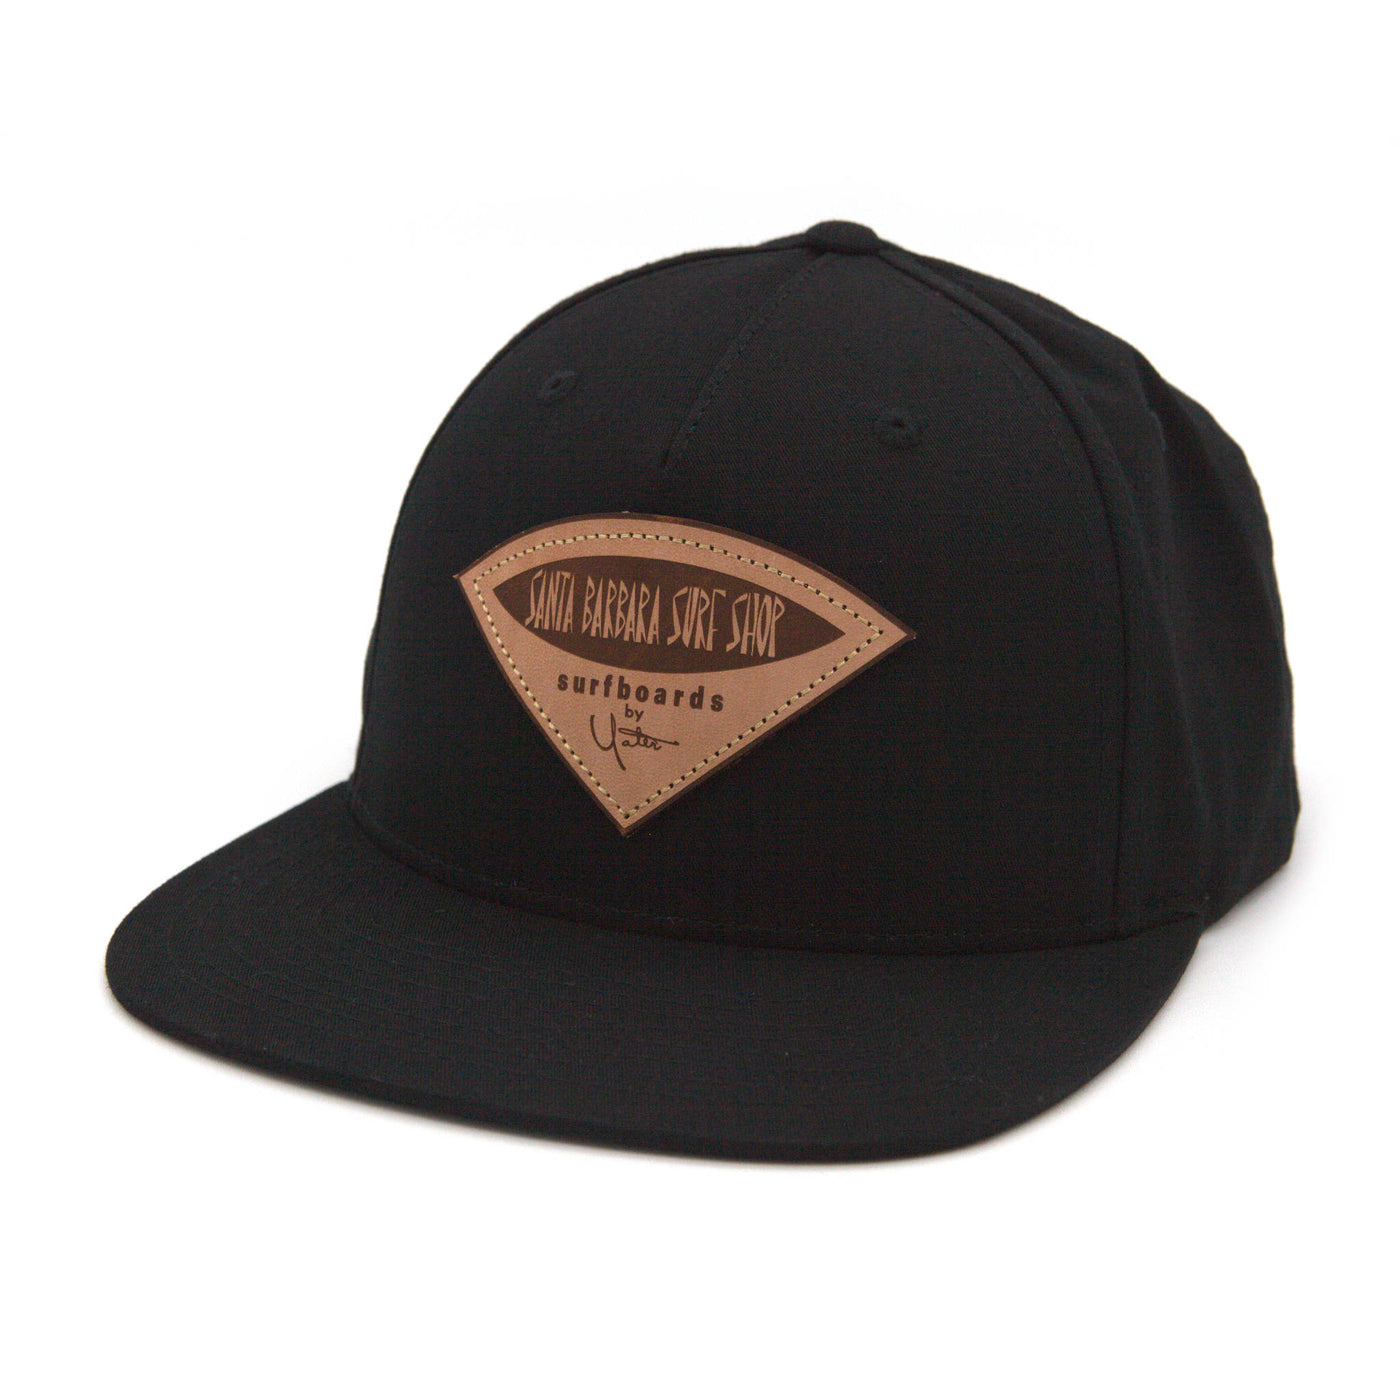 Santa Barbara Surf Shop Leather Patch Snapback Hat